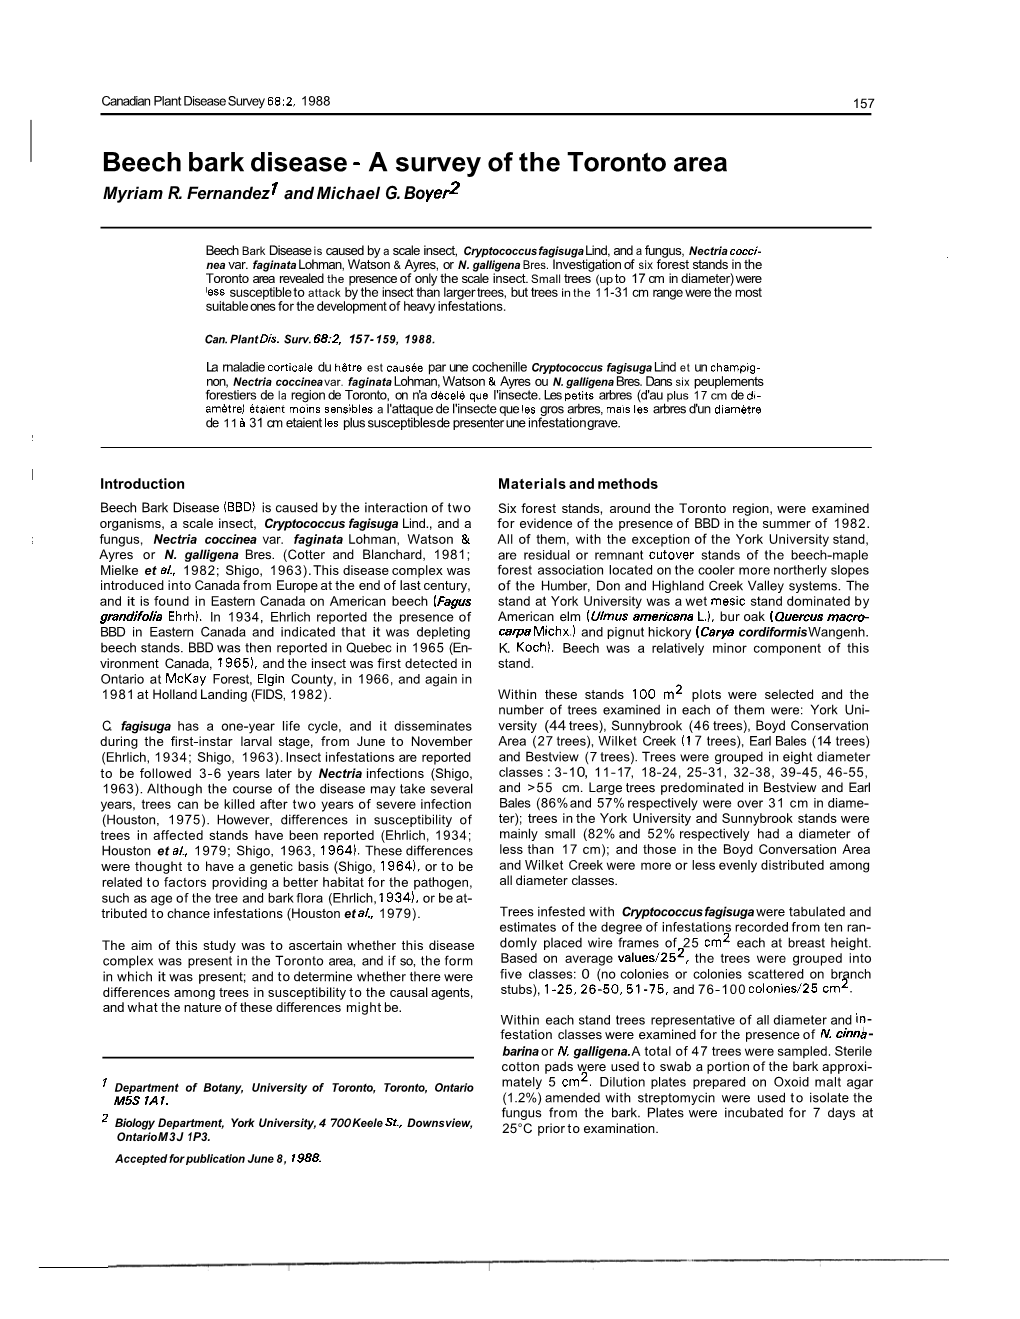 Beech Bark Disease - a Survey of the Toronto Area Myriam R